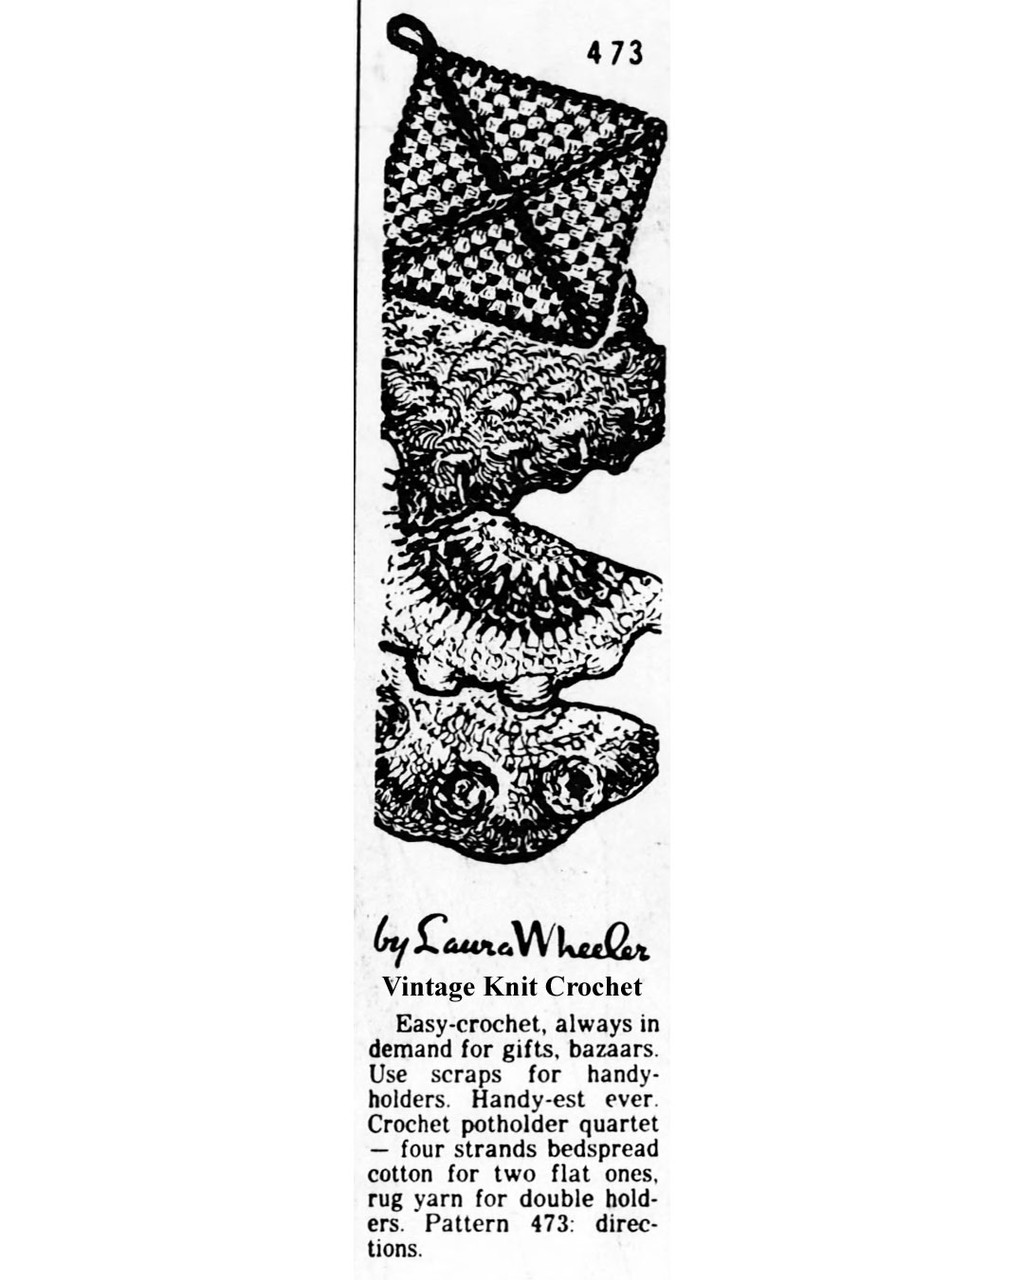 Mail Order Design 473 Crochet Potholders Newspaper advertisement 